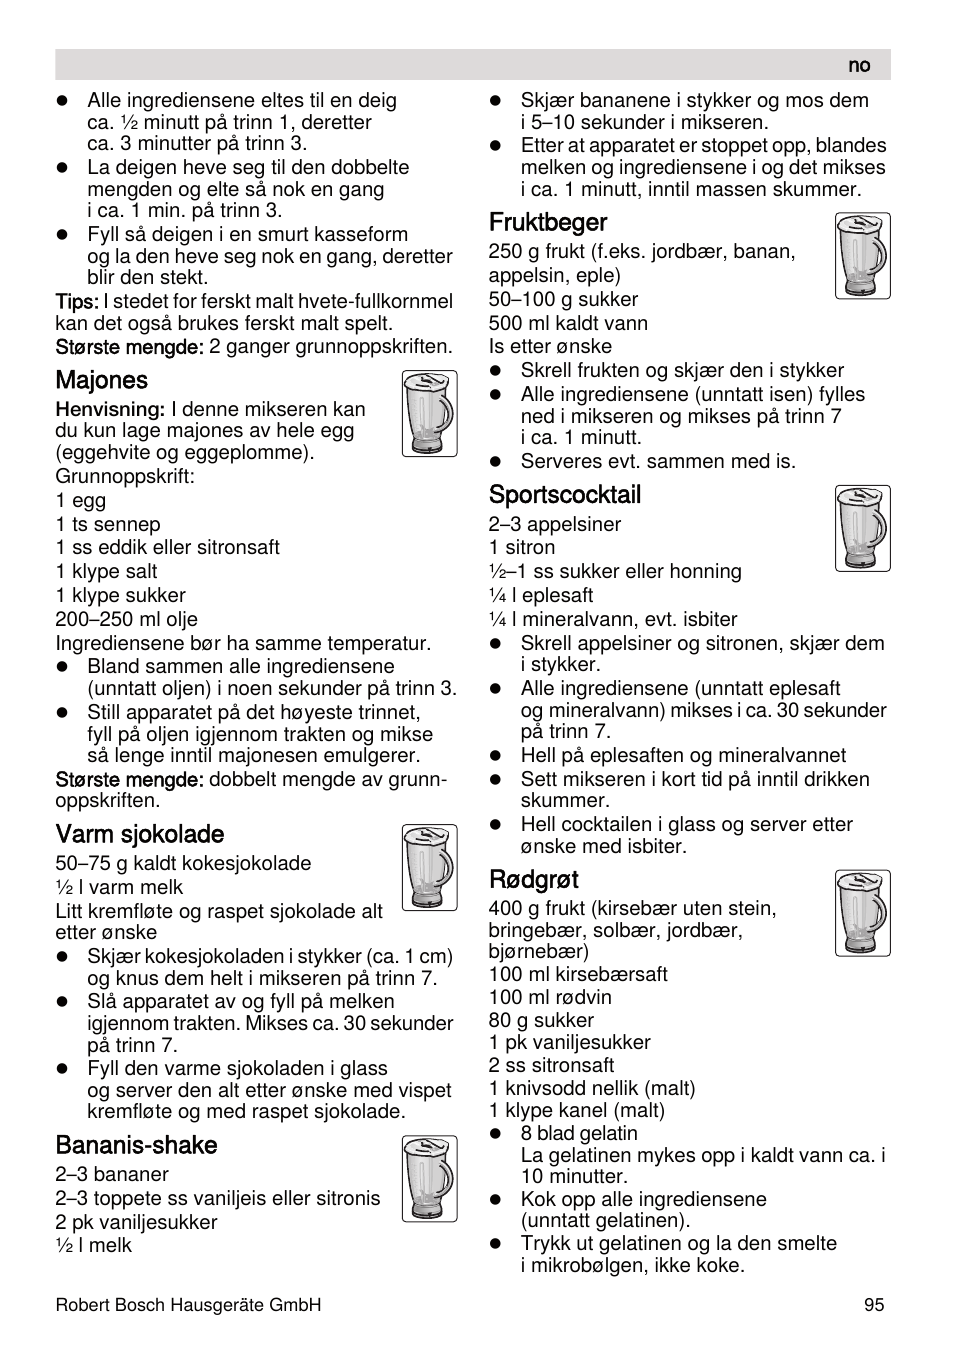 Majones, Varm sjokolade, Bananis-shake | Bosch MUMXL10T Kitchen machine  MaxxiMUM User Manual | Page 95 / 132 | Original mode